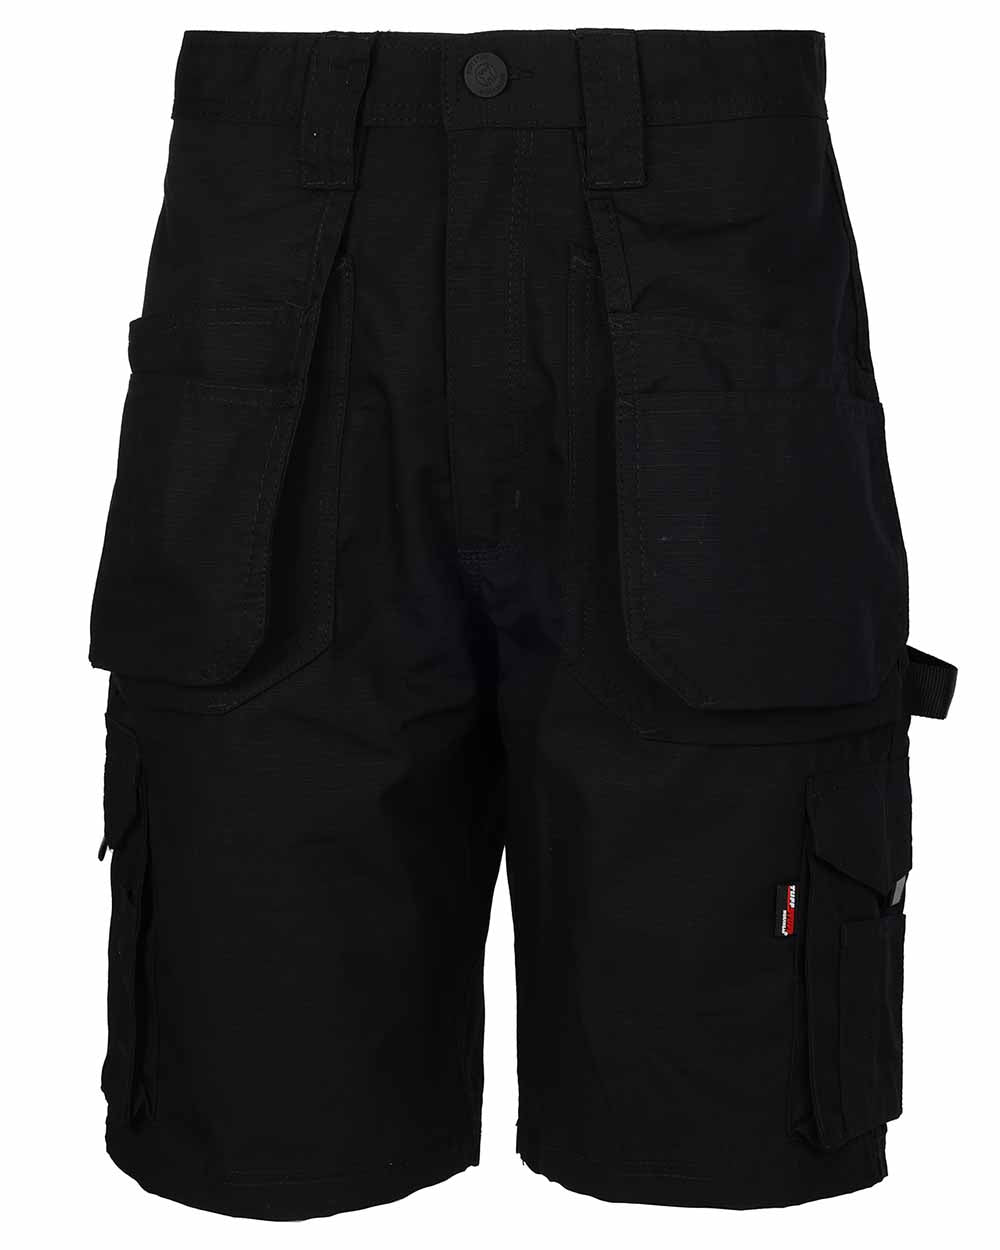 Black Coloured TuffStuff Enduro Work Shorts On A White Background 